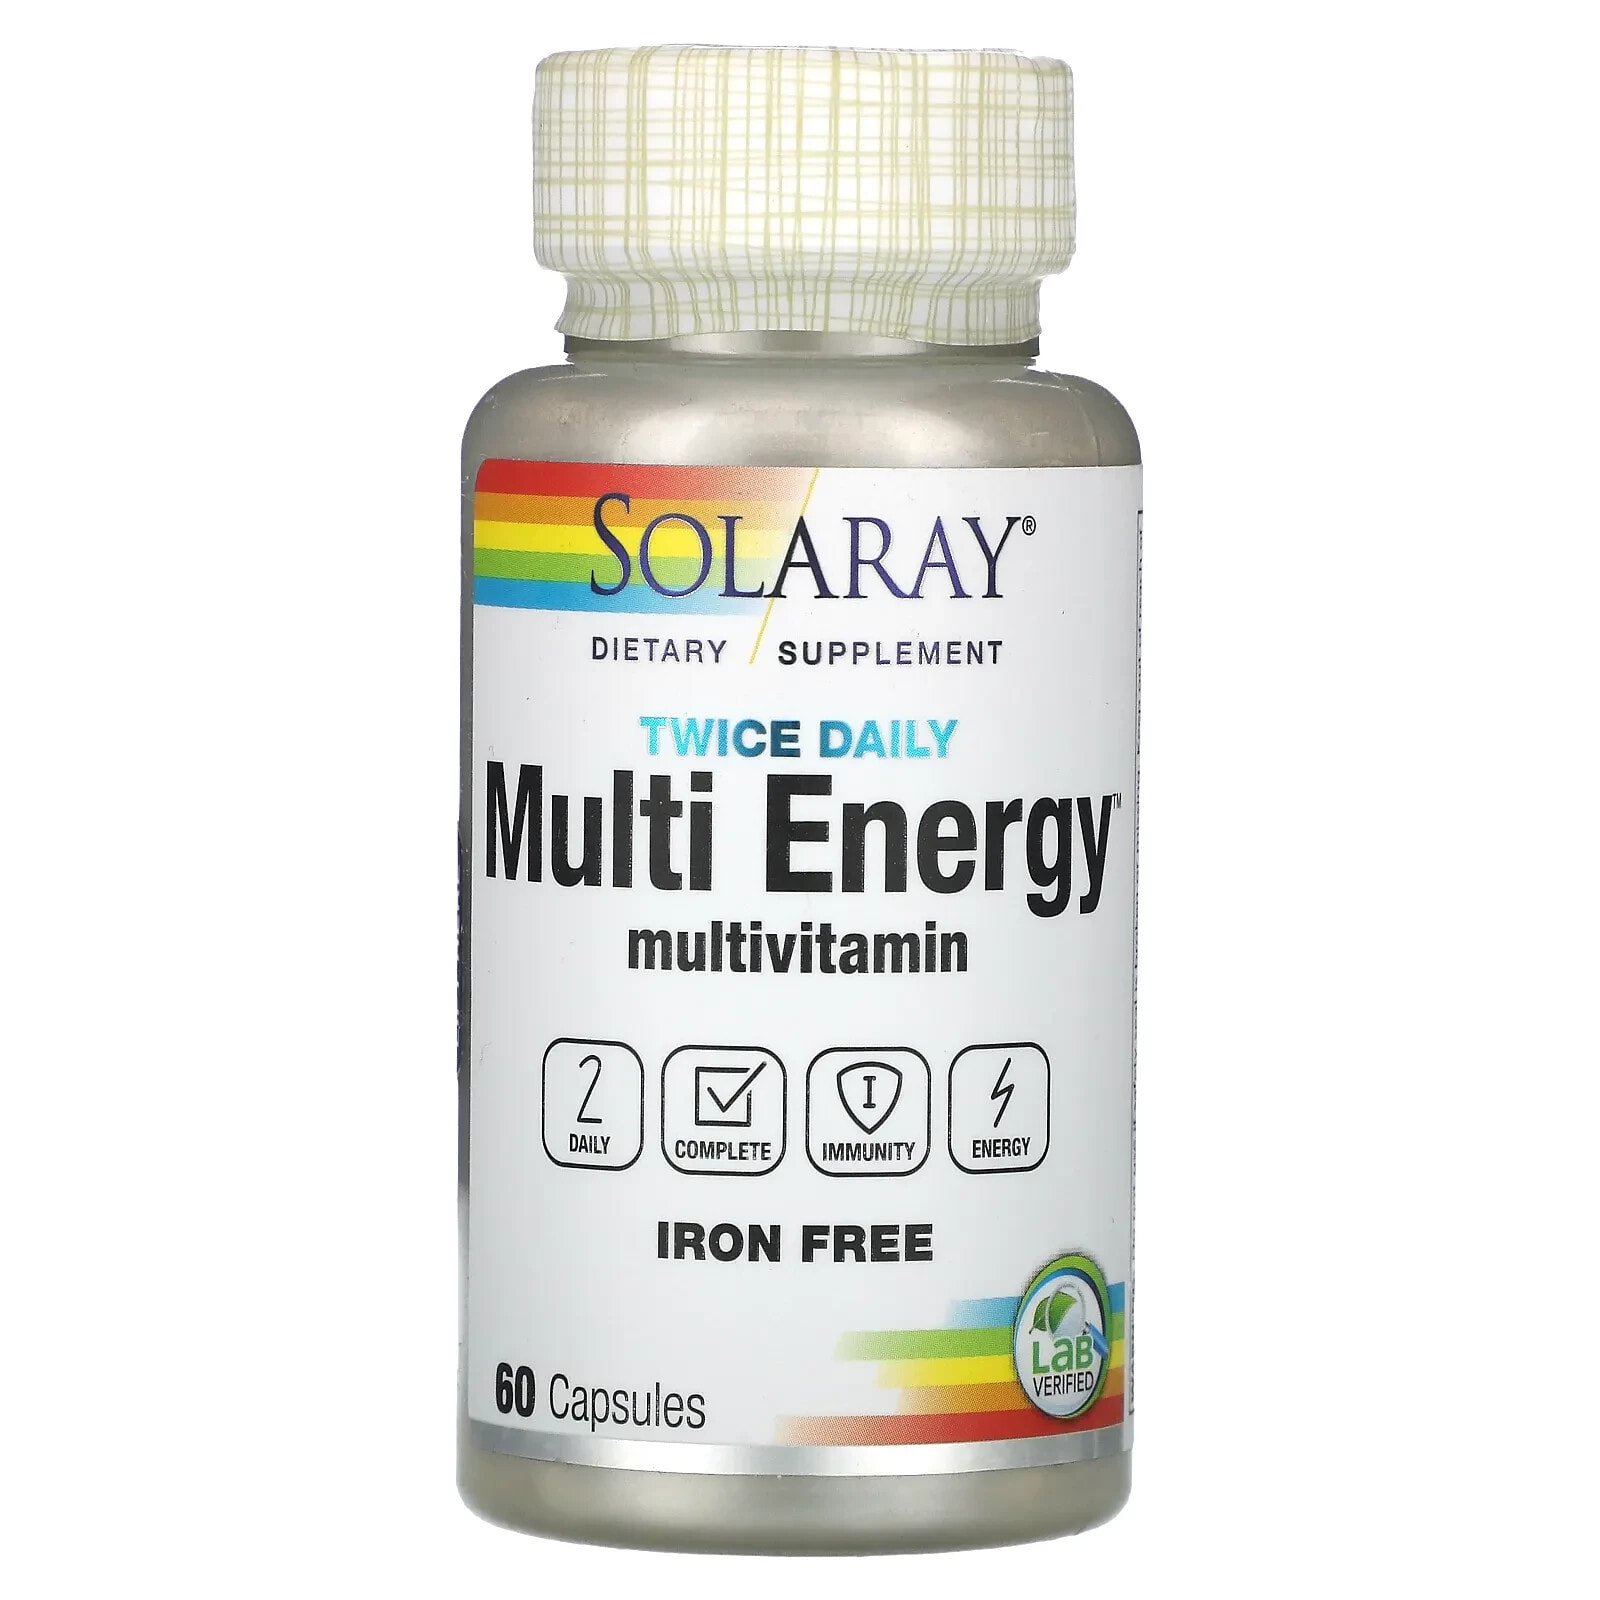 Solaray, Twice Daily Multi Energy Multivitamin, Iron Free, 60 Capsules